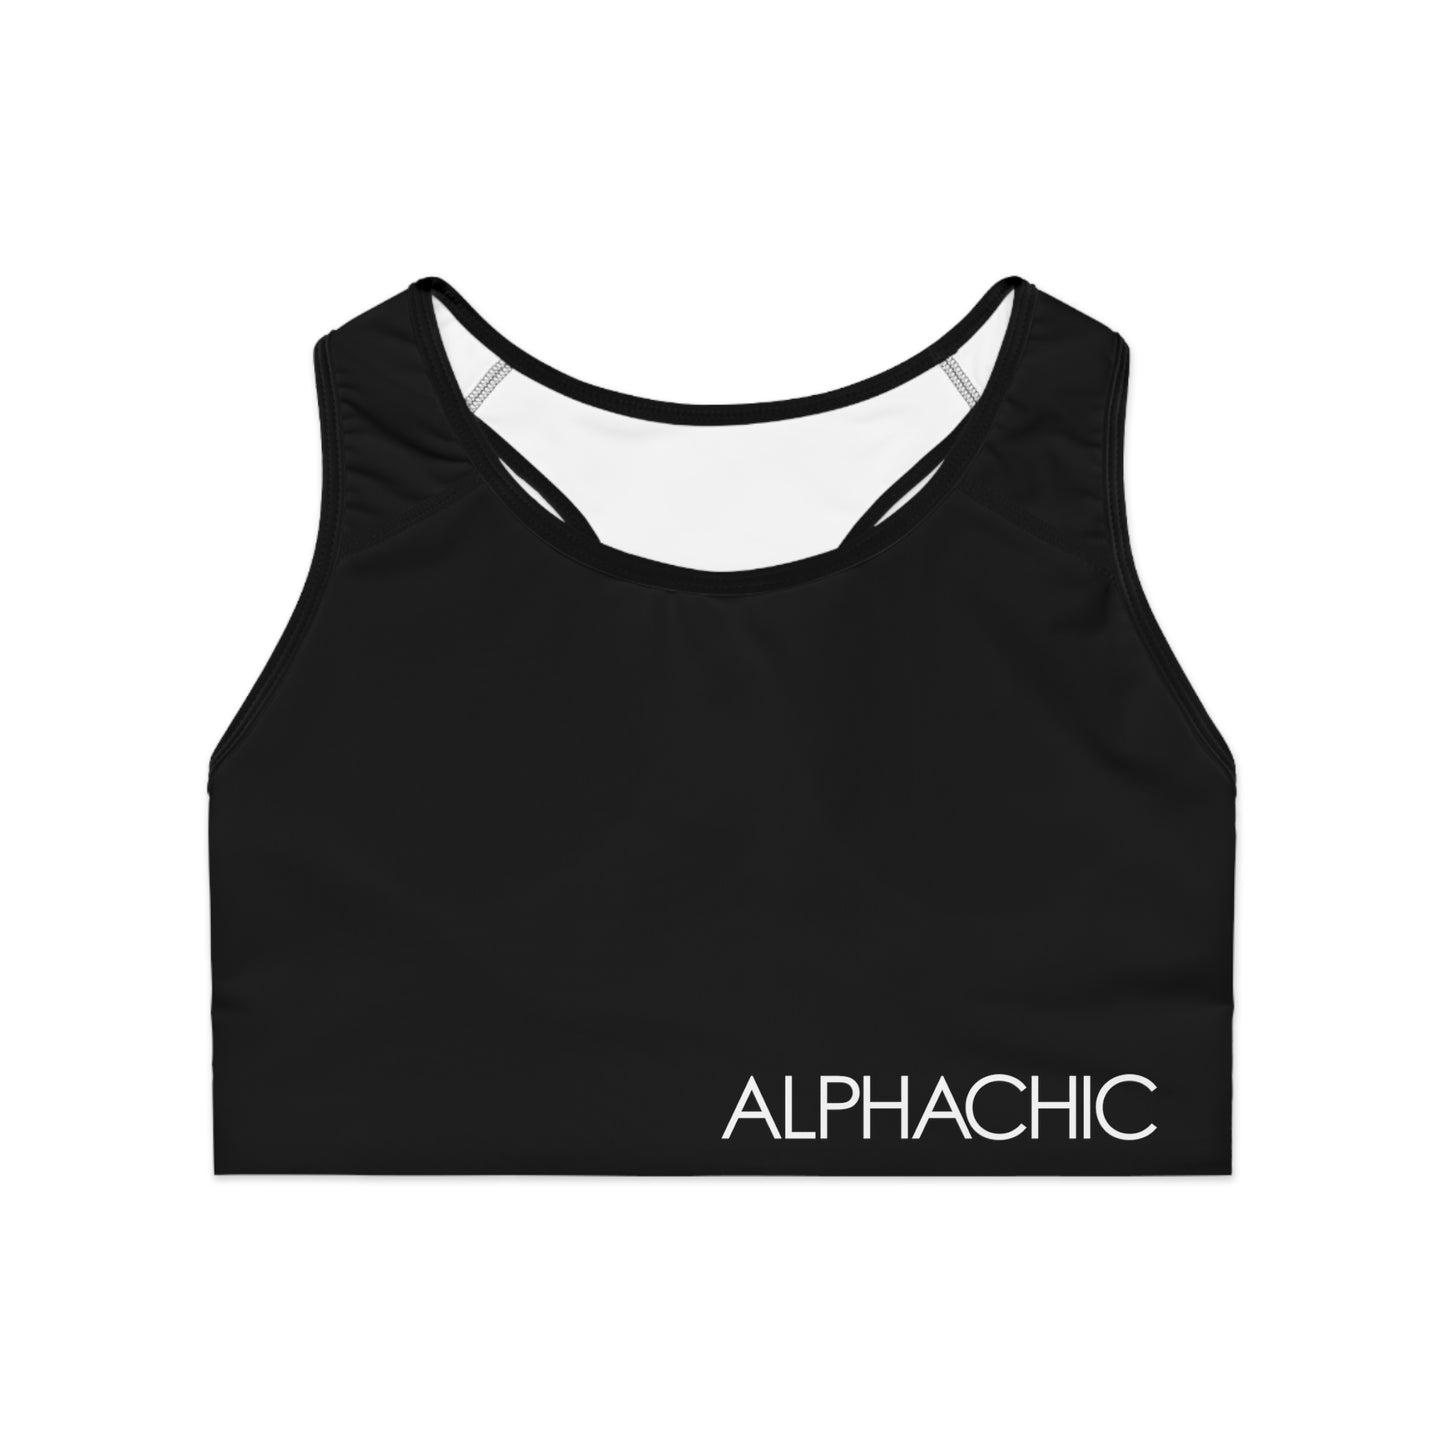 AlphaChic Sports Bra - Black